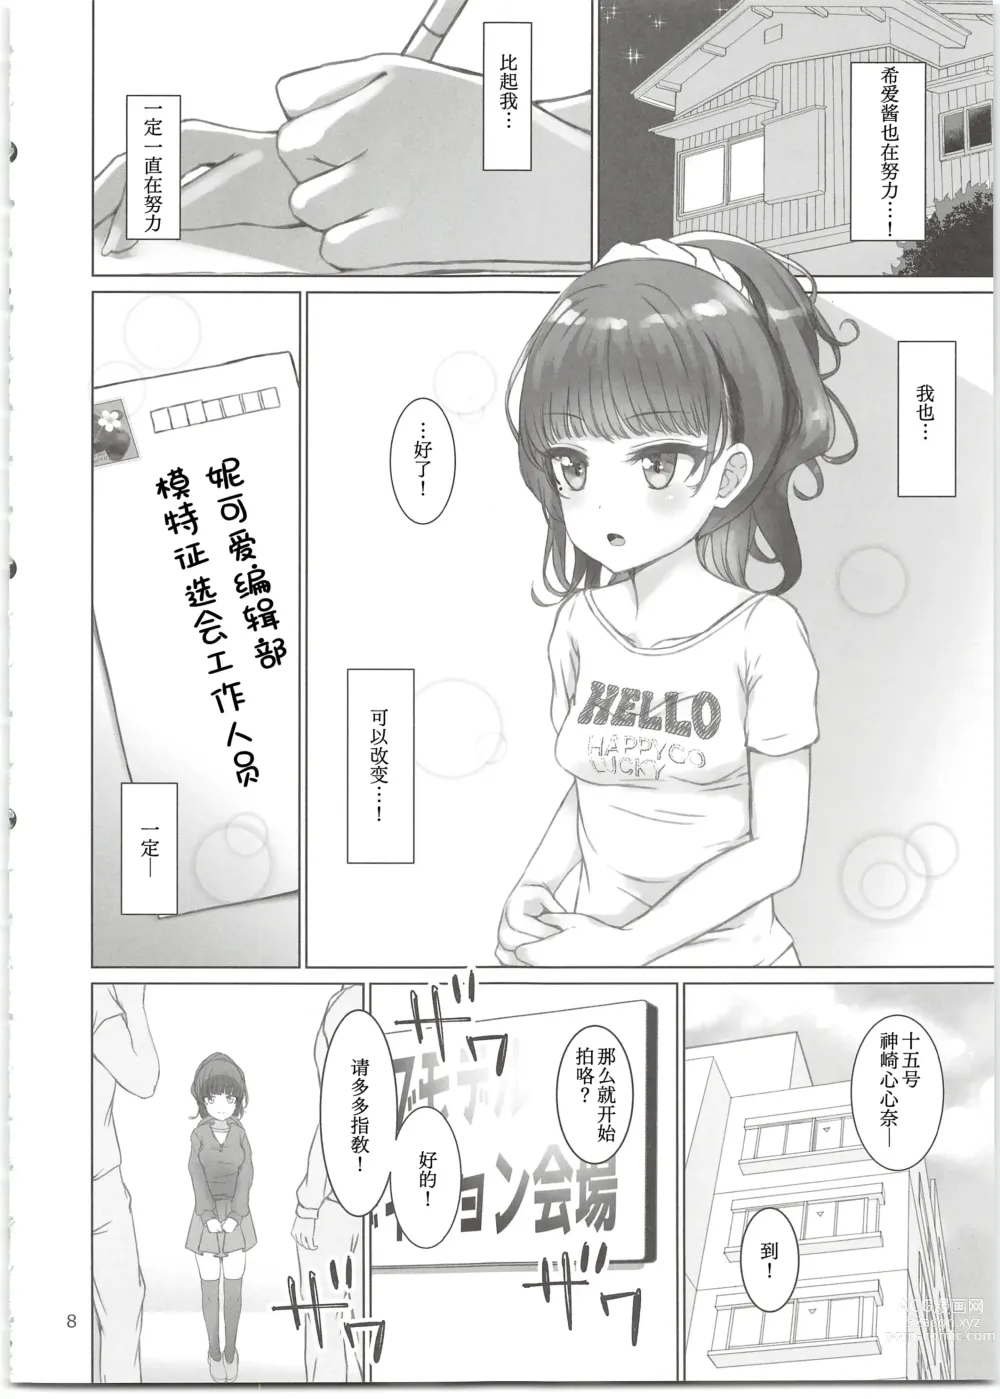 Page 8 of doujinshi Nico Love